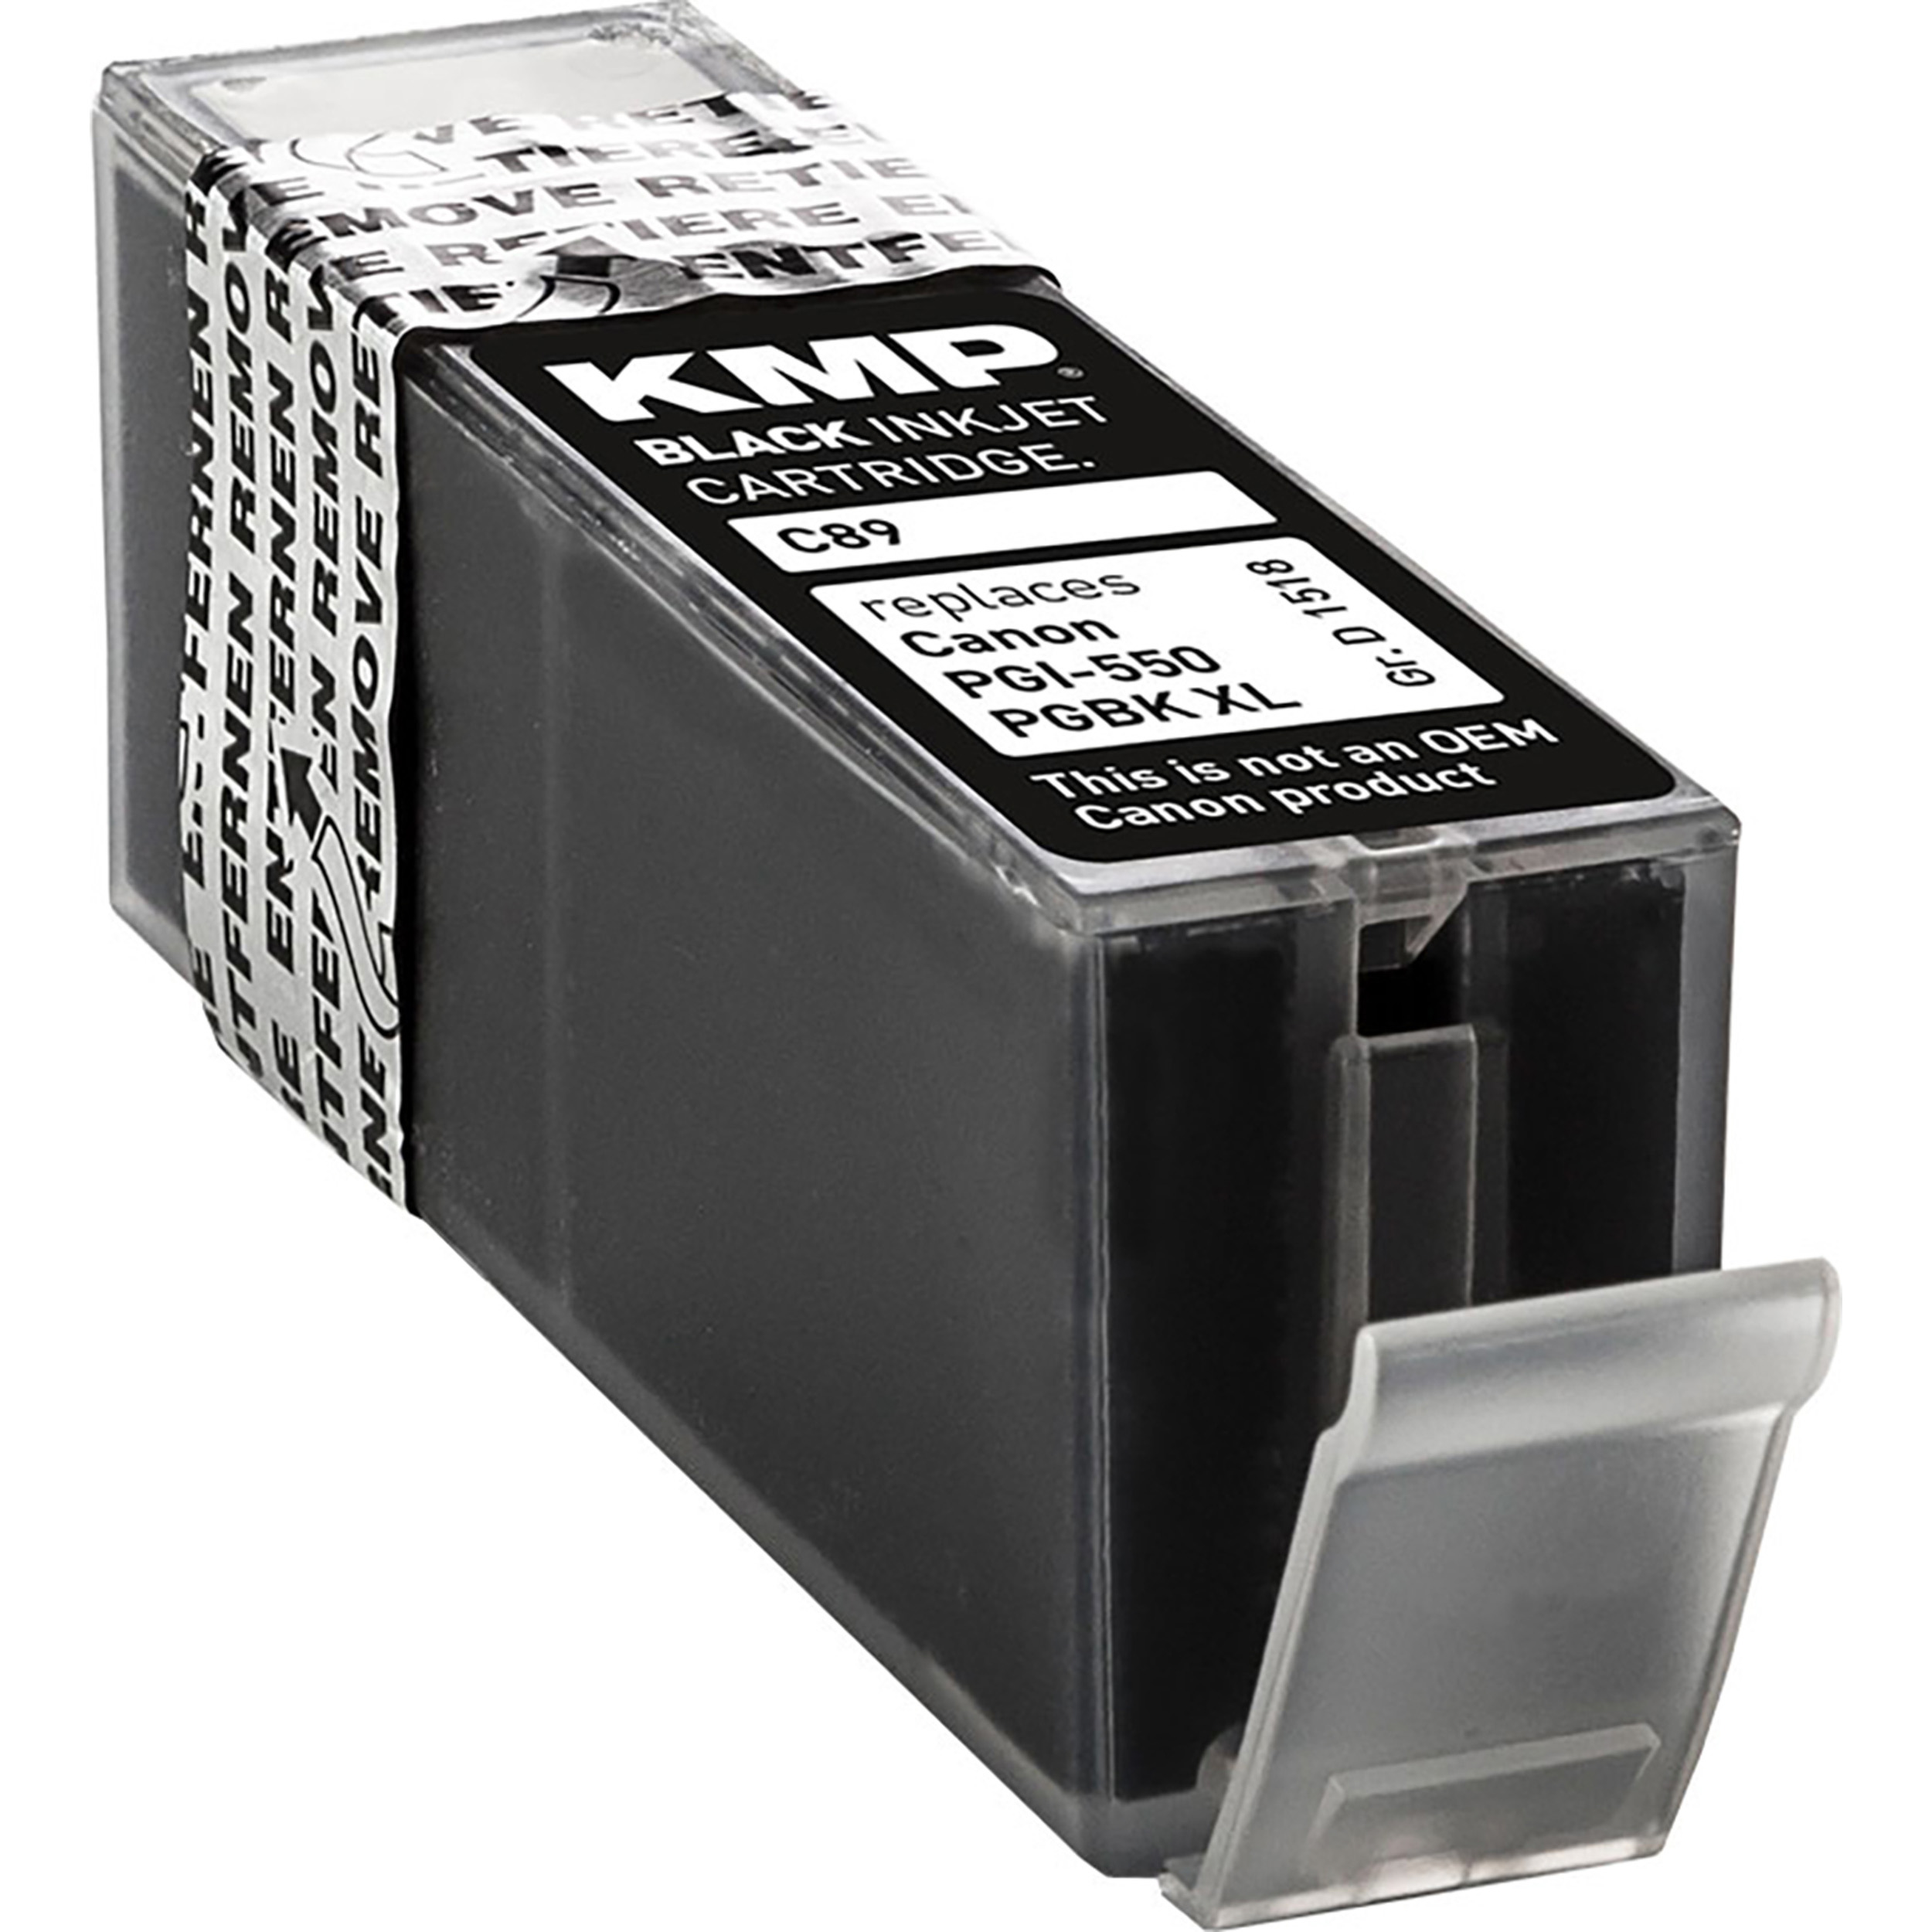 KMP Tintenpatrone für Canon PGI550PGBKXL Black Cartridge Ink schwarz (6431B001) (6431B001)